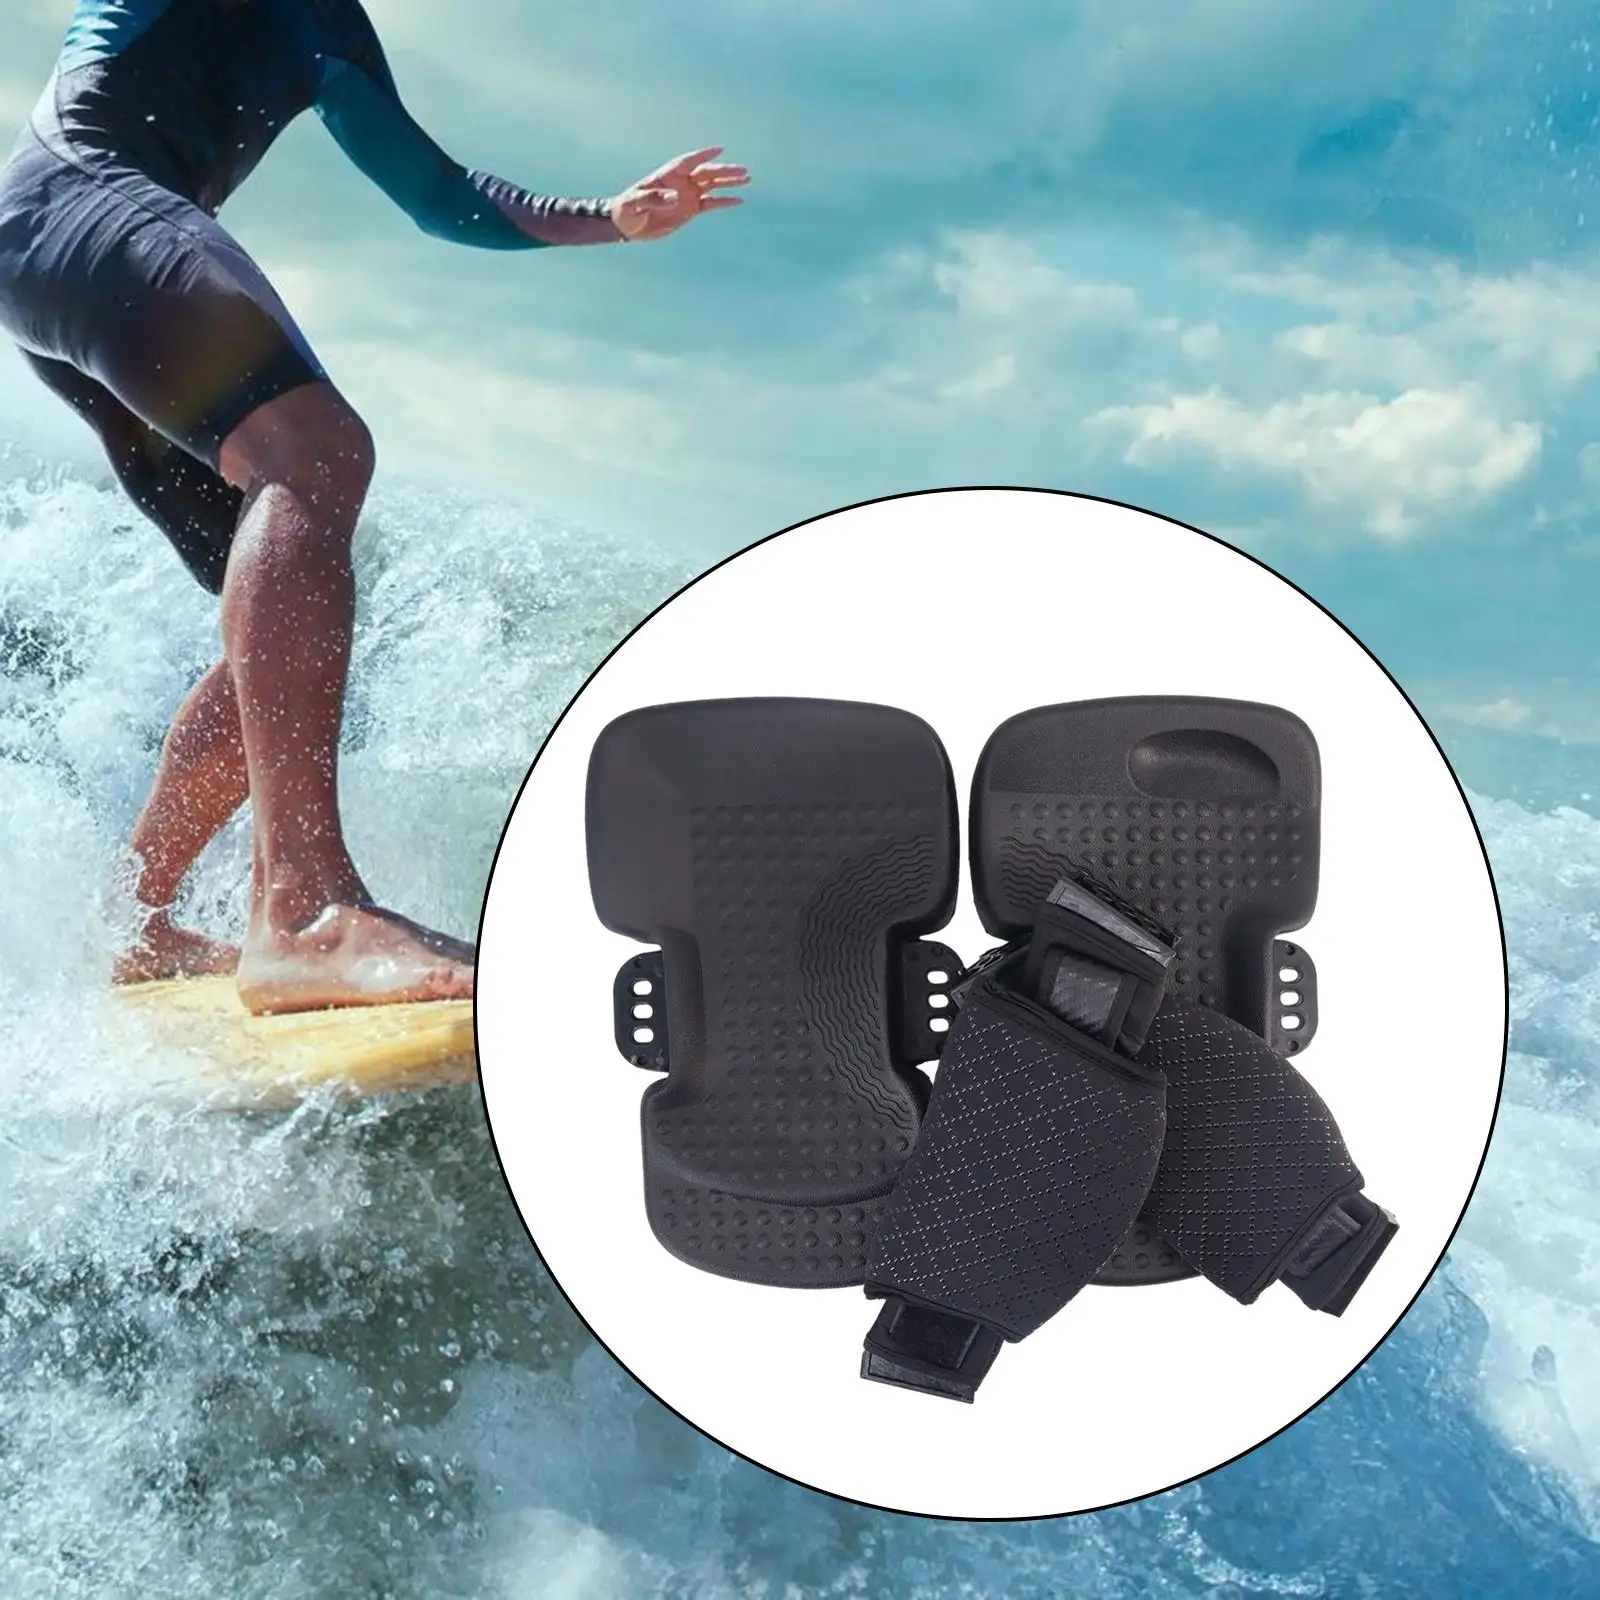 Kiteboard Paddleboard Foot Covers Adjustable Excellent Workmanship Multipurpose 30x18cm Black Color for Stand up Paddleboarding